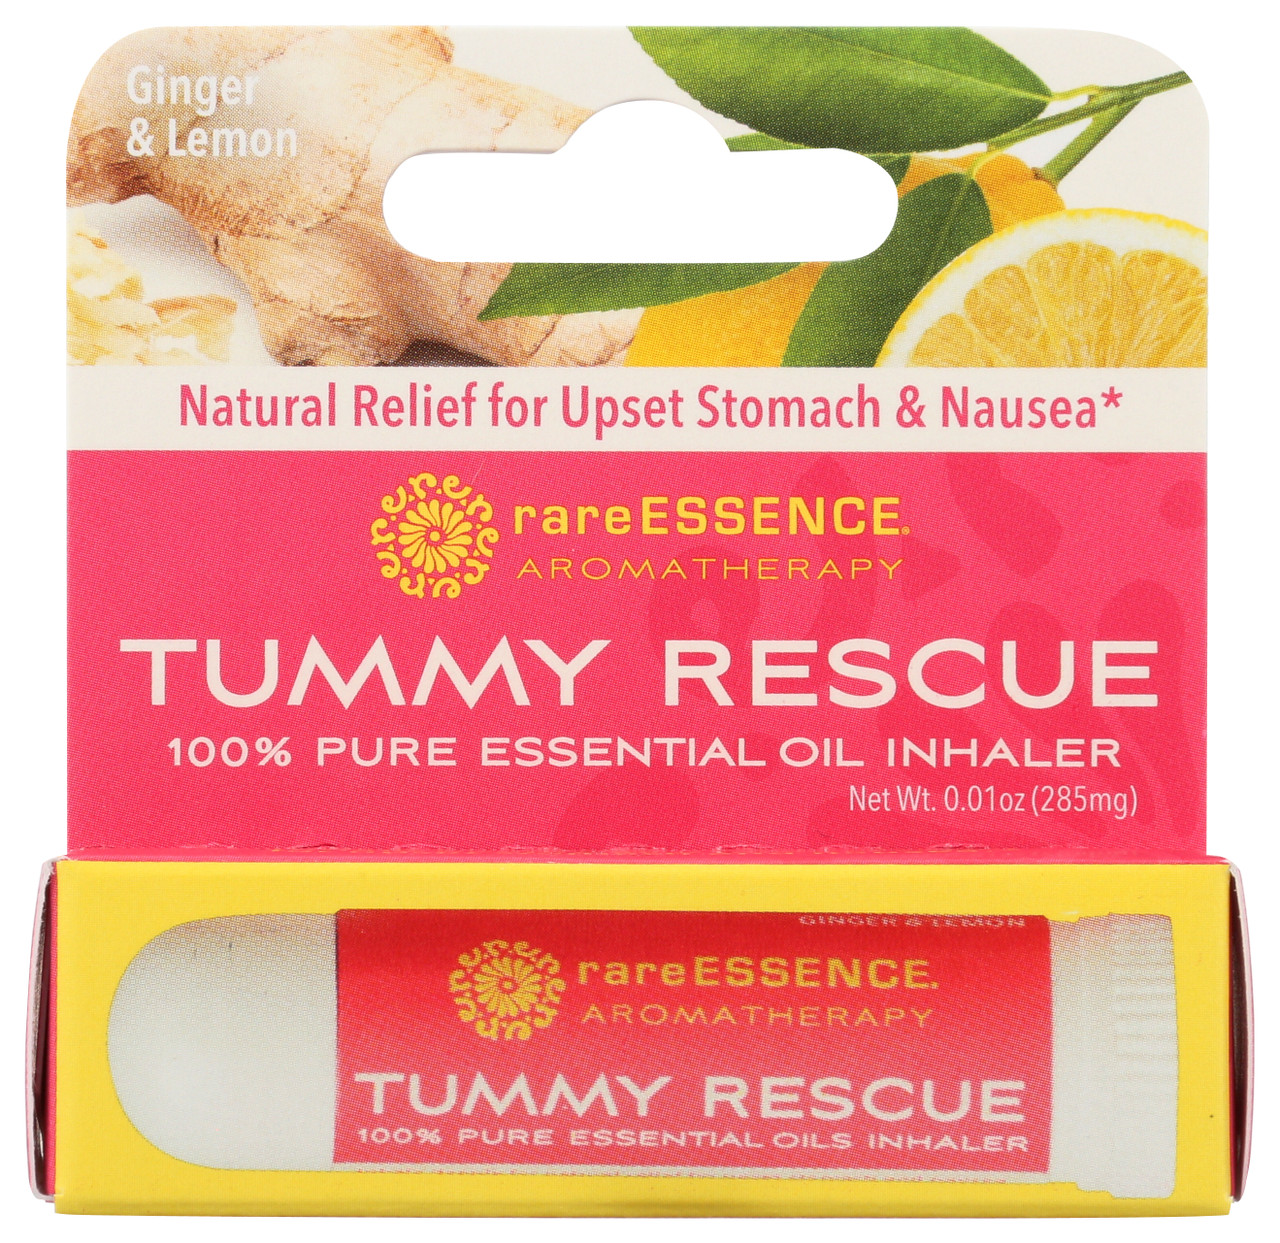 Tummy Rescue Aromatherapy Inhaler Ginger & Lemon Essential Oil Inhaler .01oz